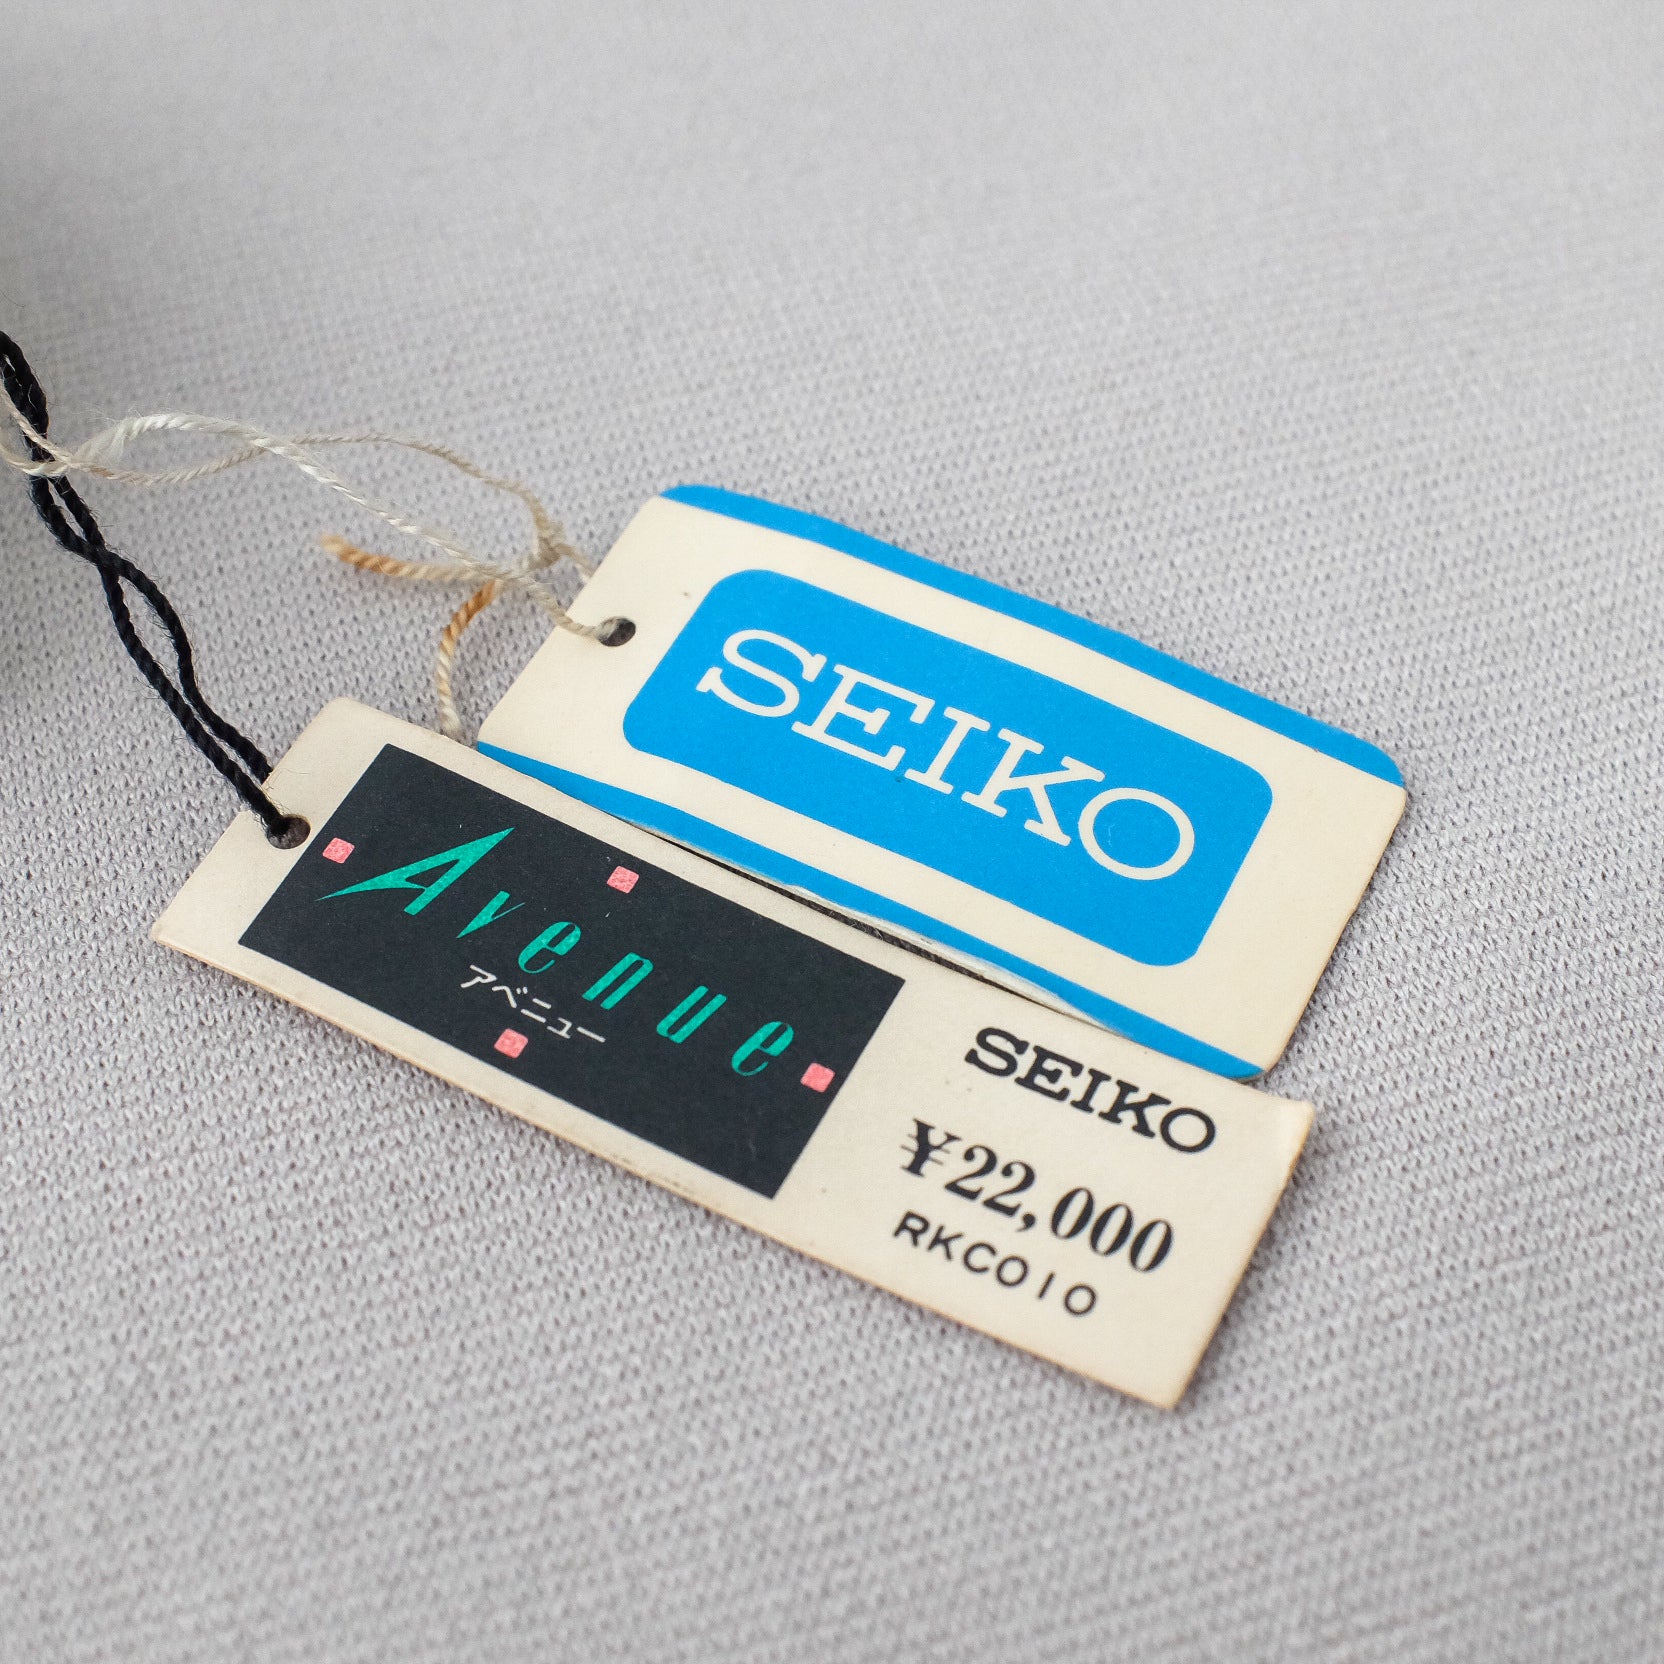 Seiko Avenue RKC010 from 1984 (NOS)